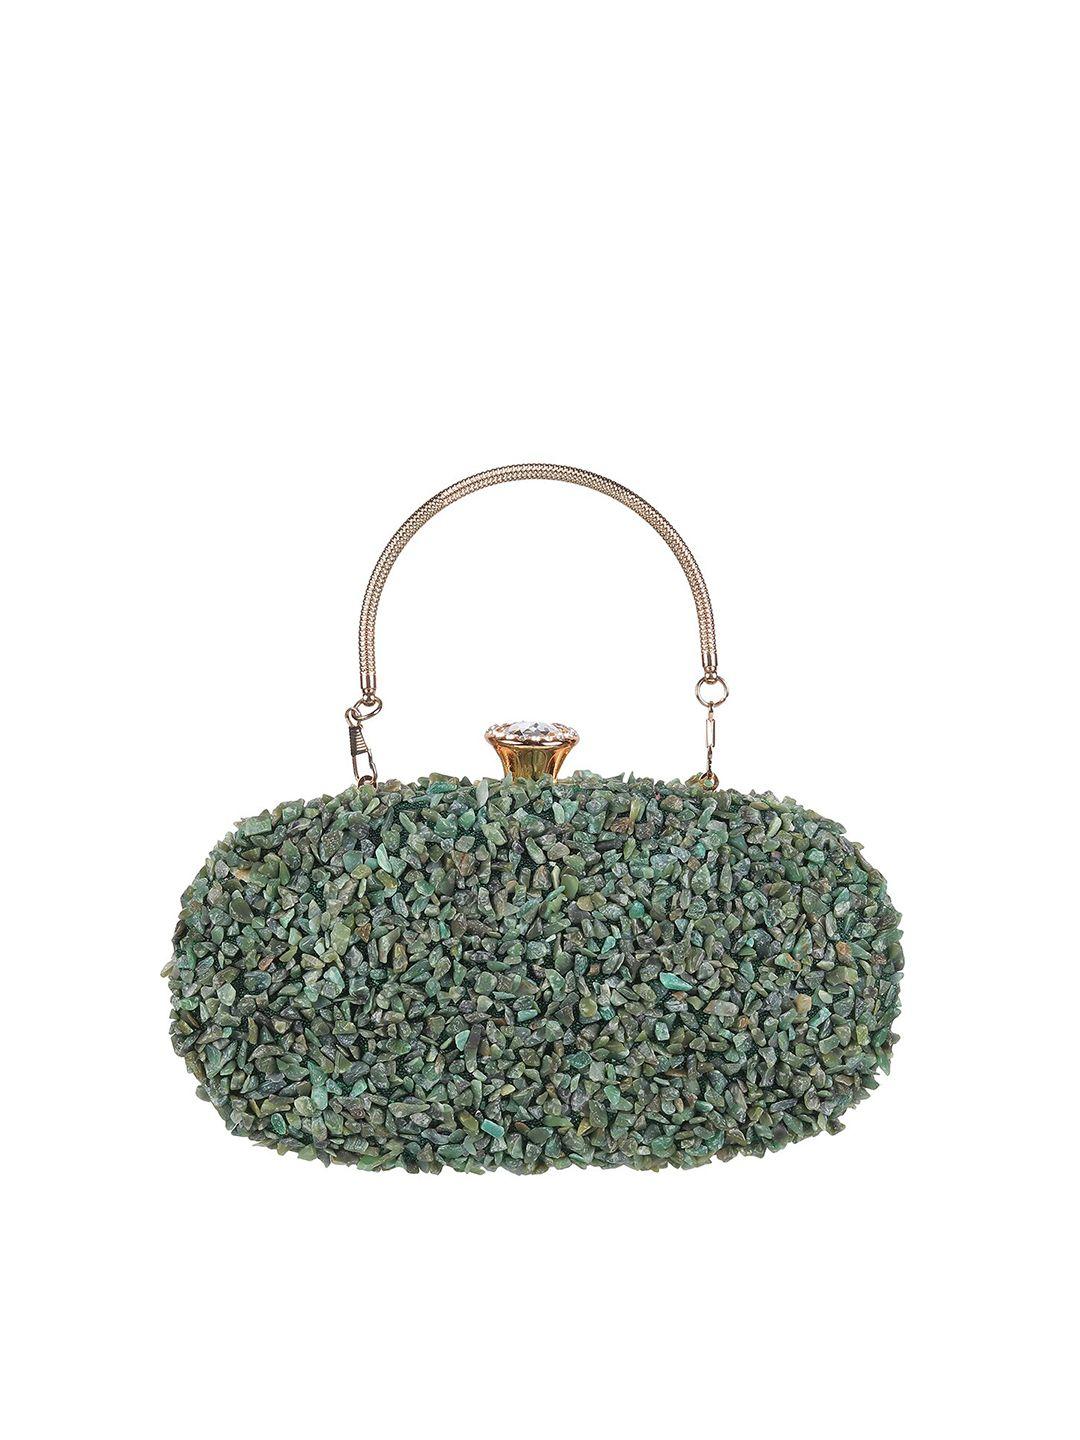 mochi embroidered purse clutch